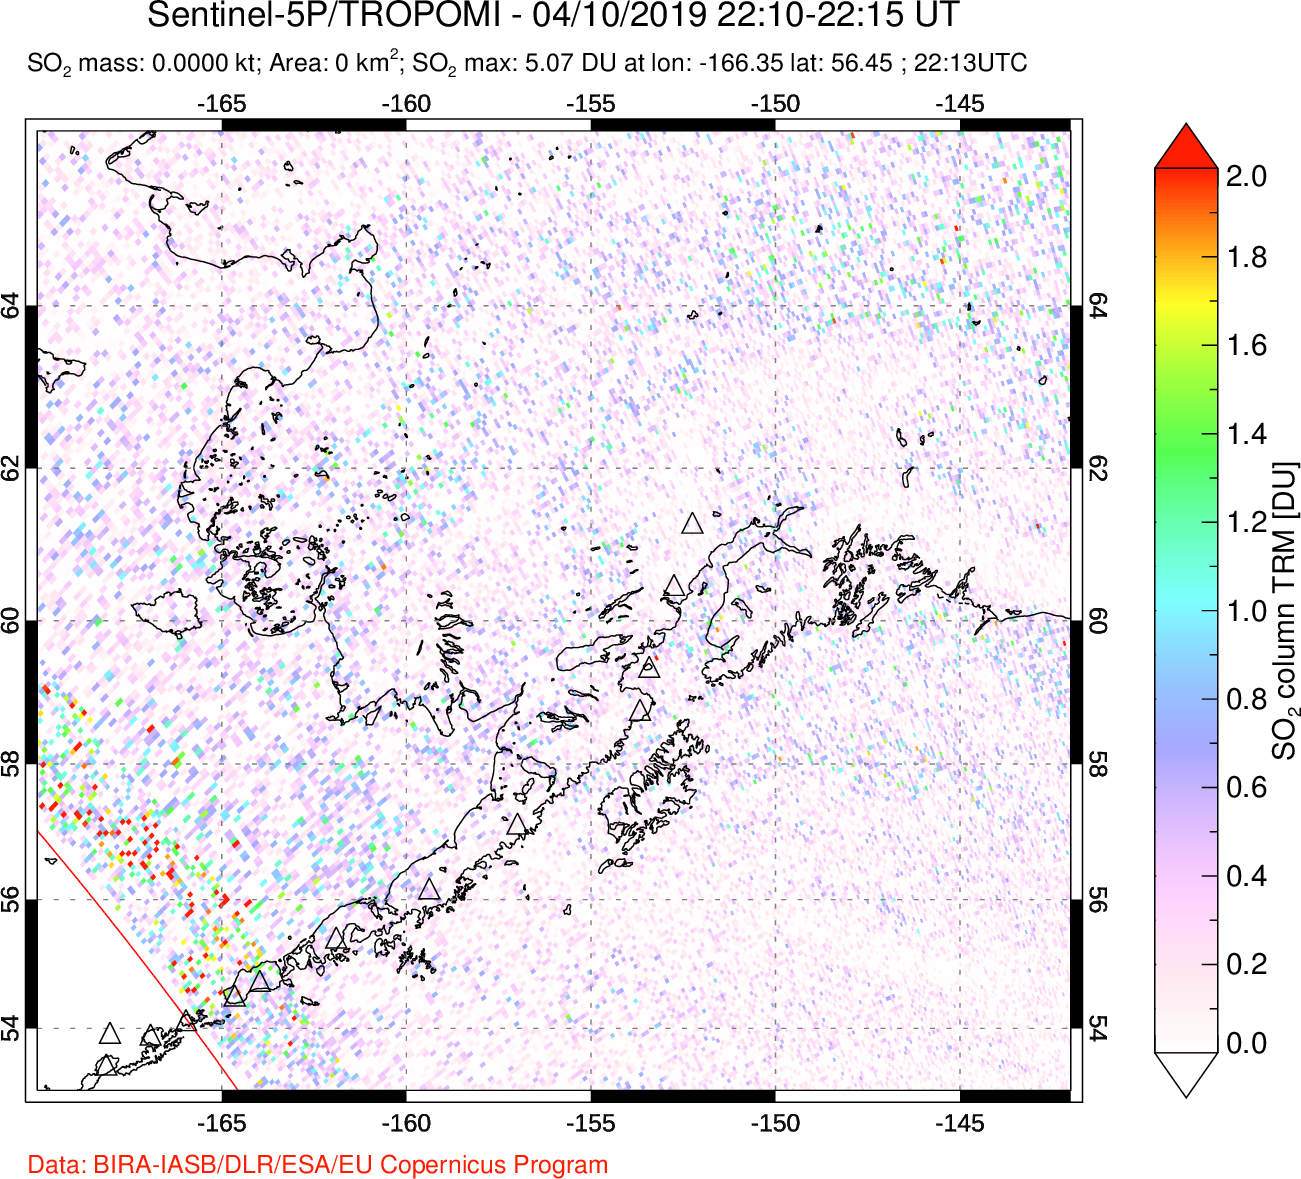 A sulfur dioxide image over Alaska, USA on Apr 10, 2019.